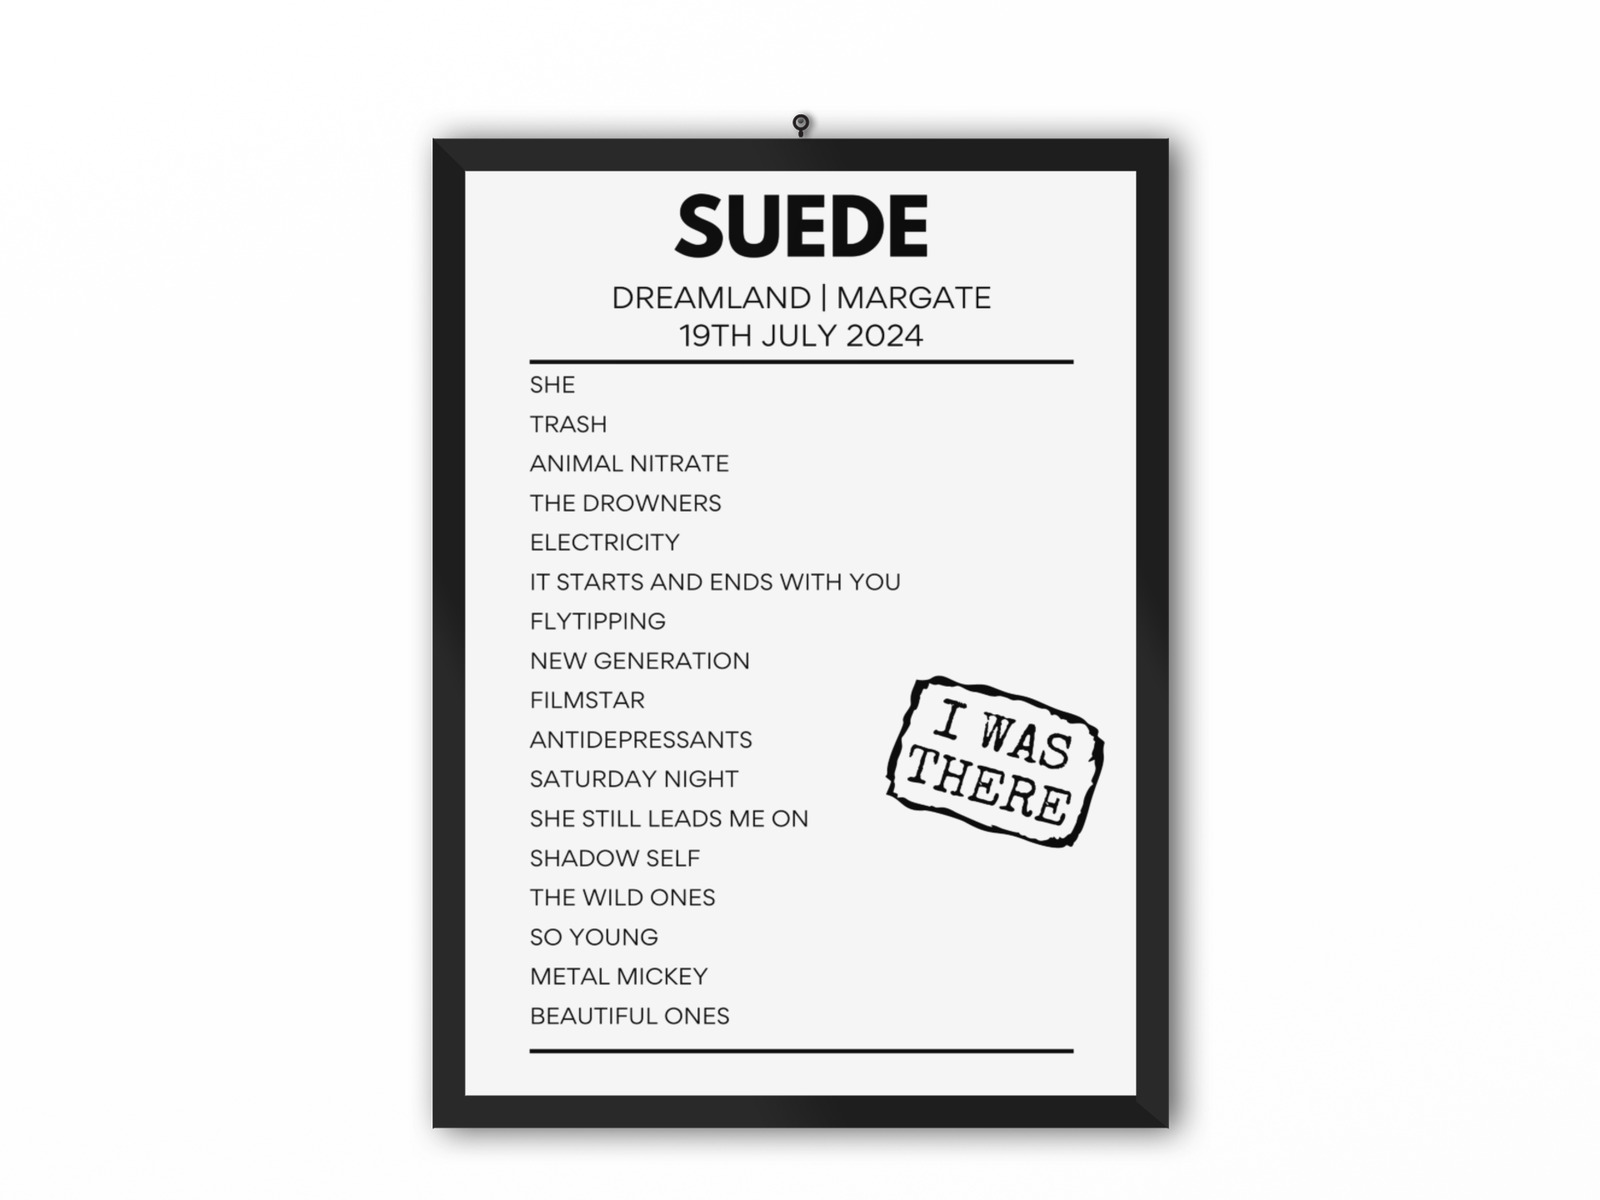 Suede Dreamland Margate July 2024 Setlist Poster